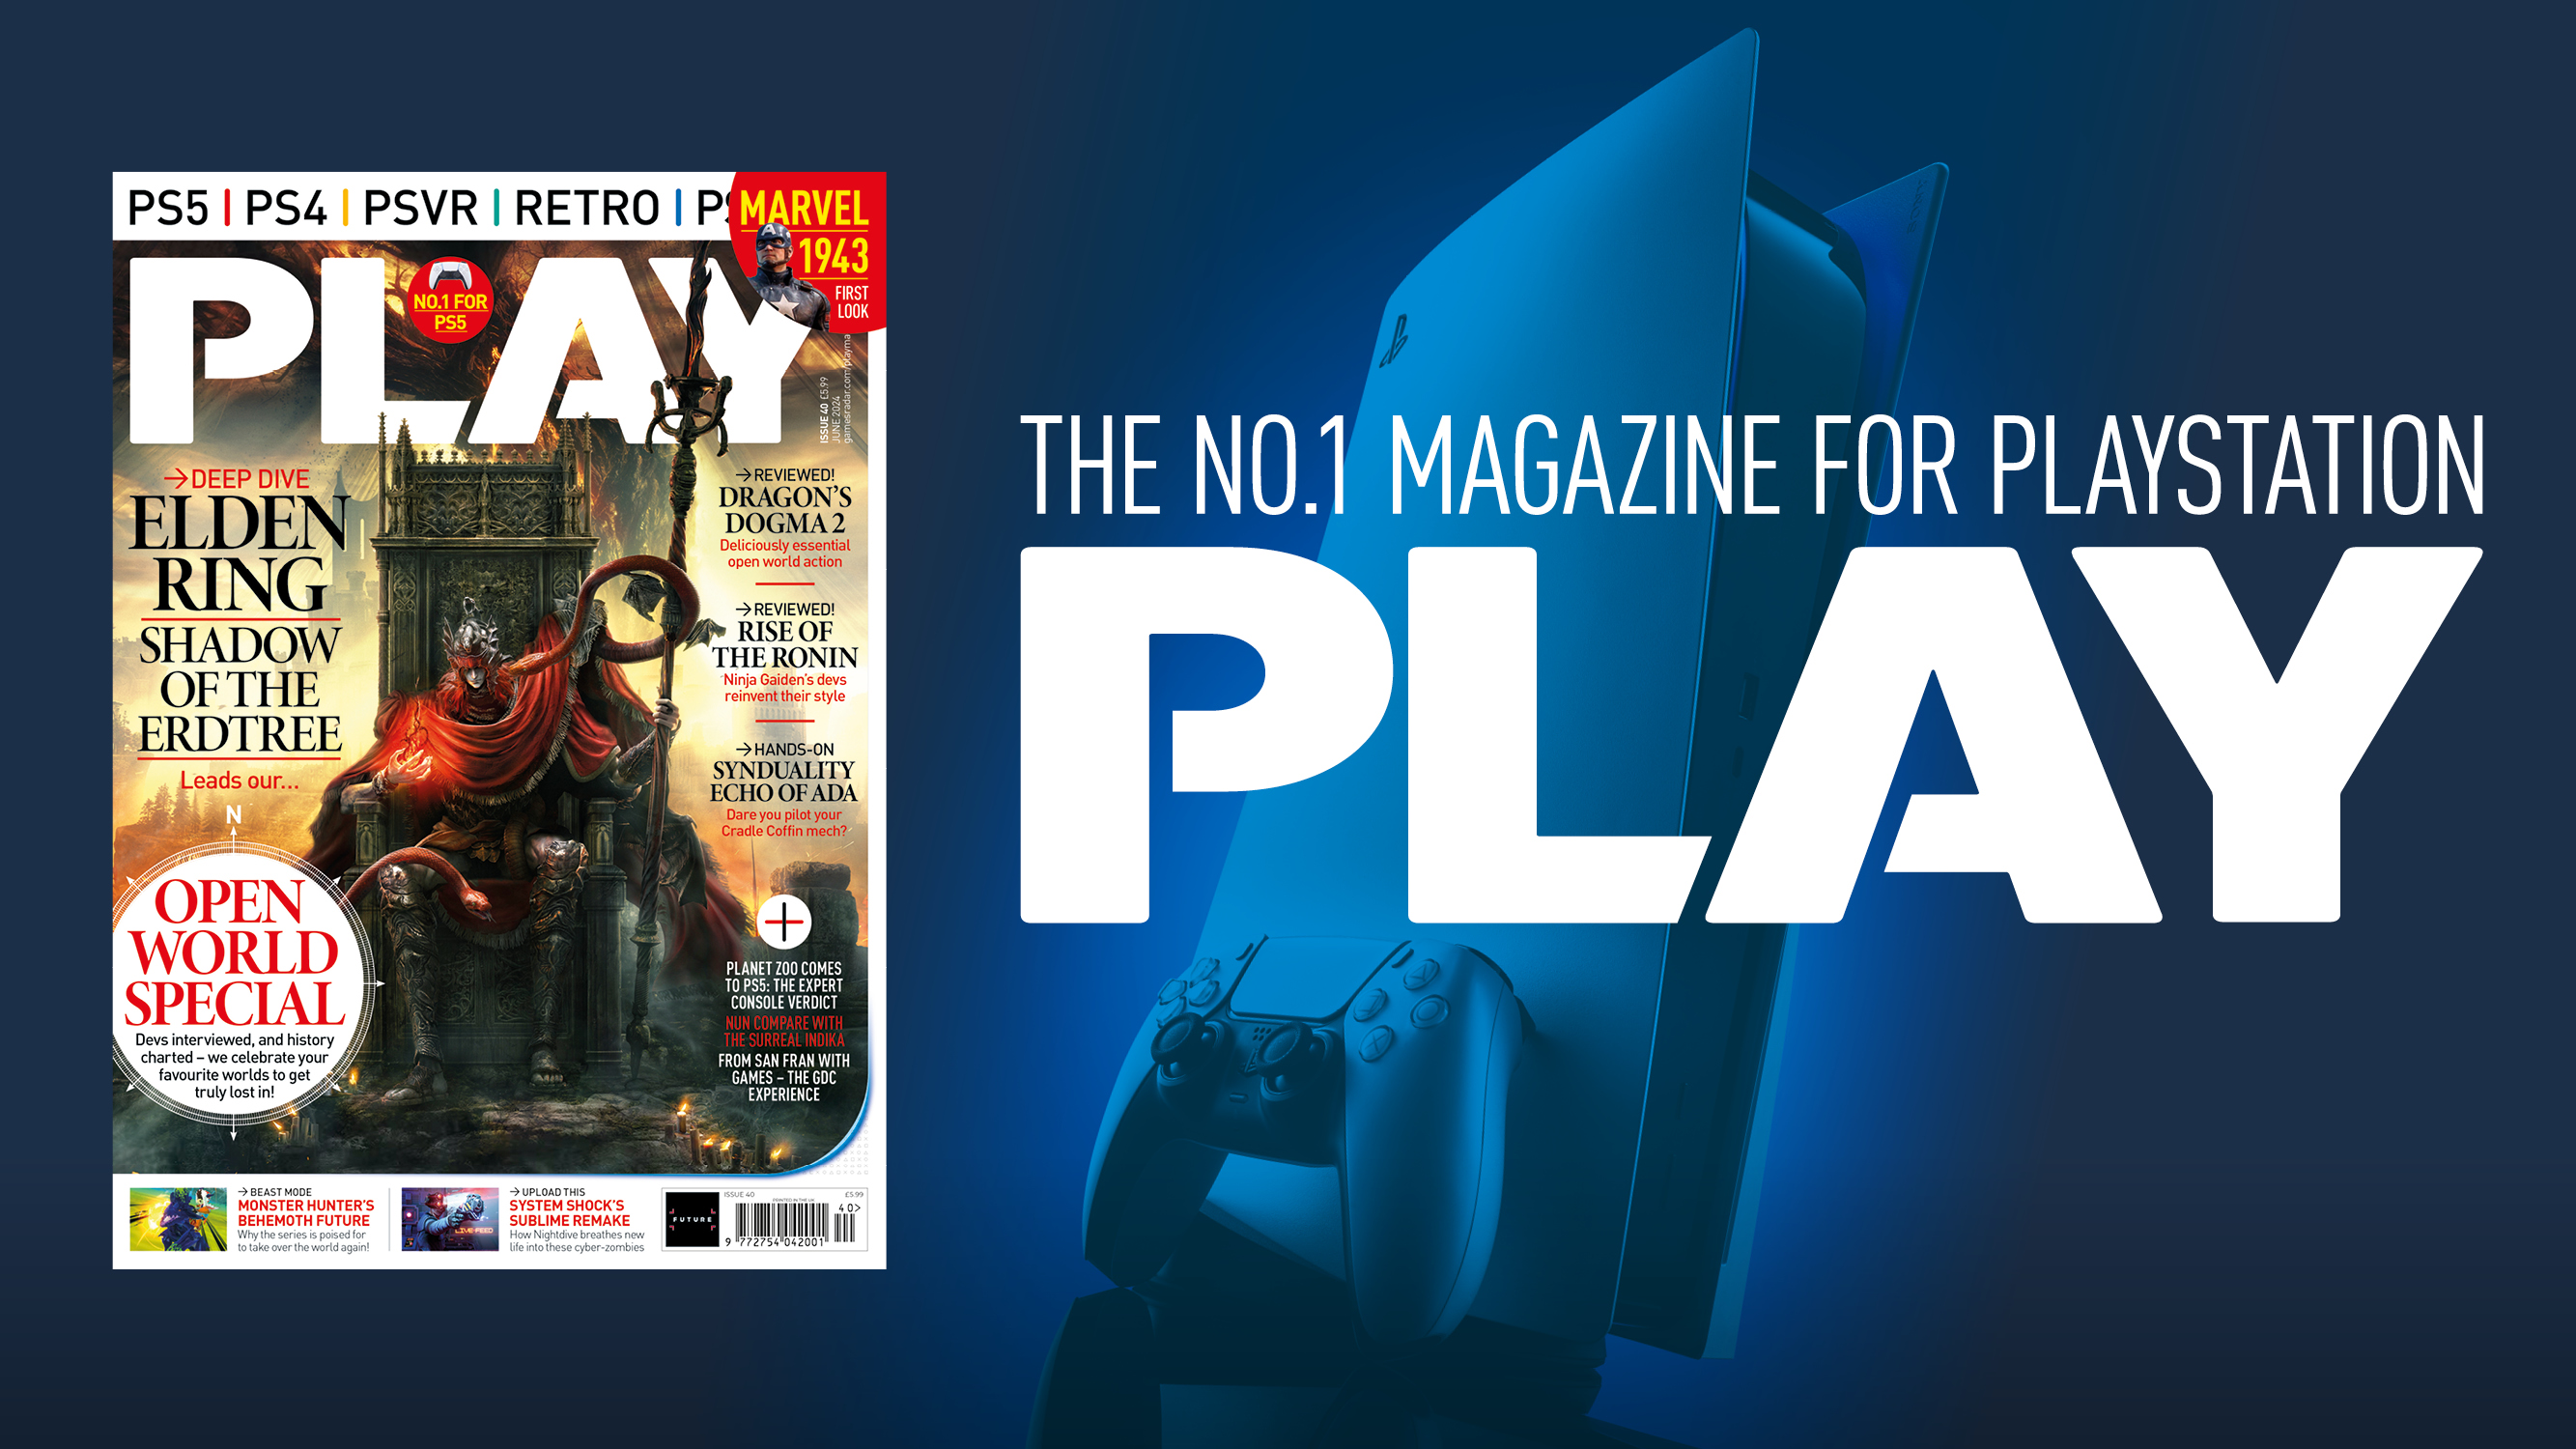 PLAY Magazine